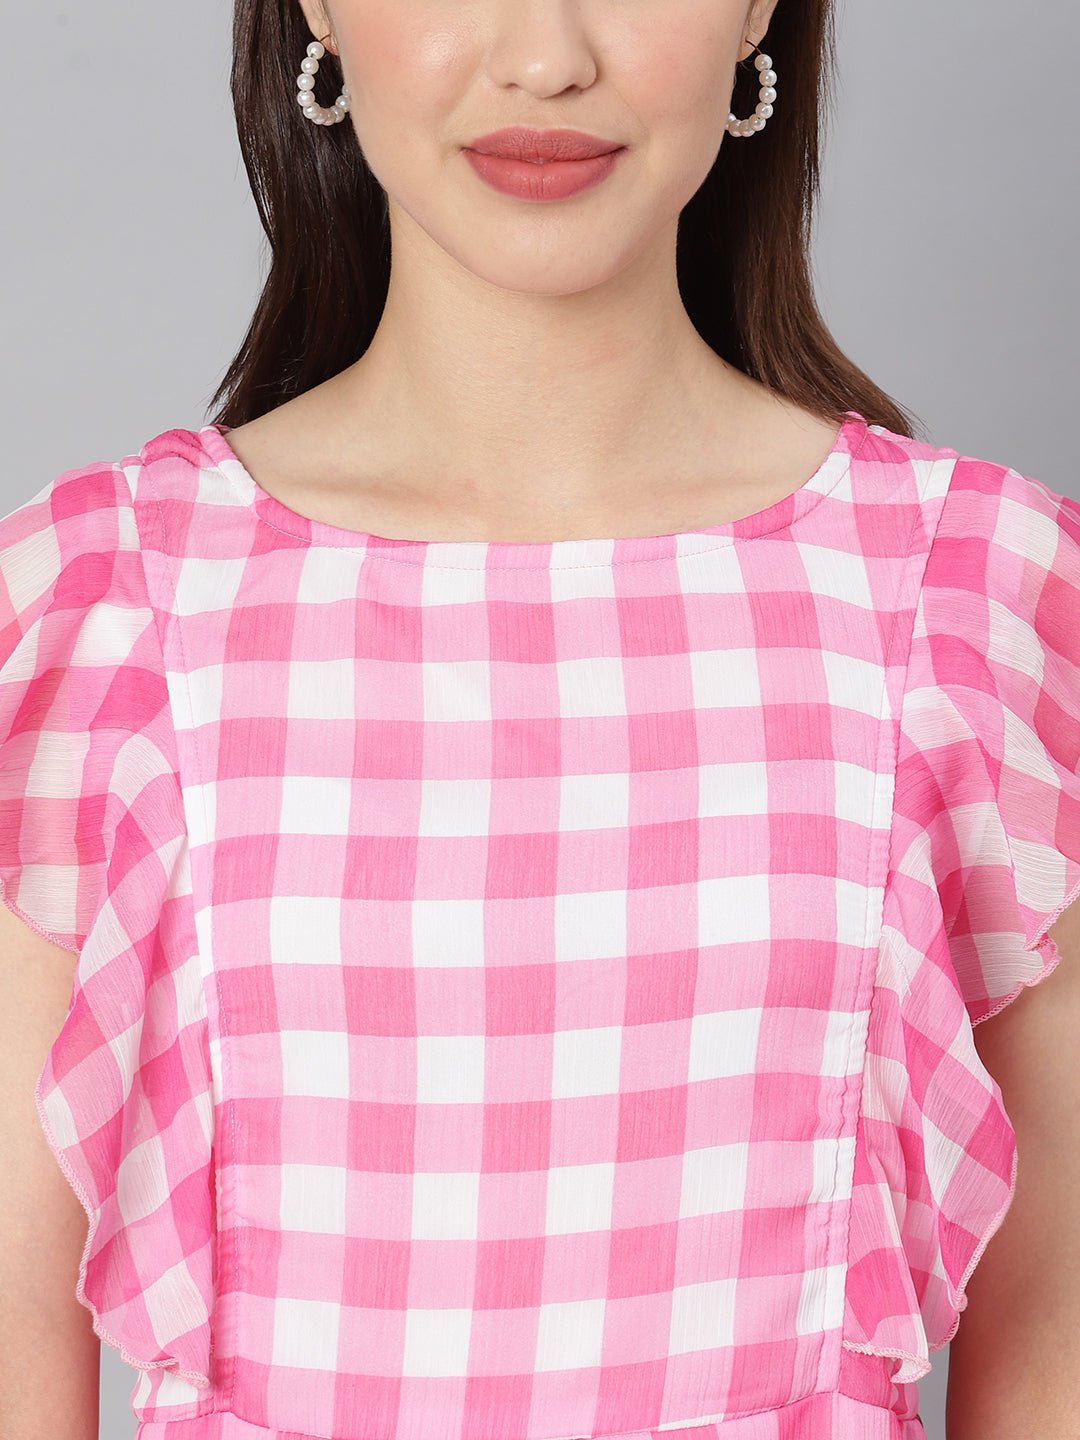 Women's Pink Check Polyester Maxi Dress